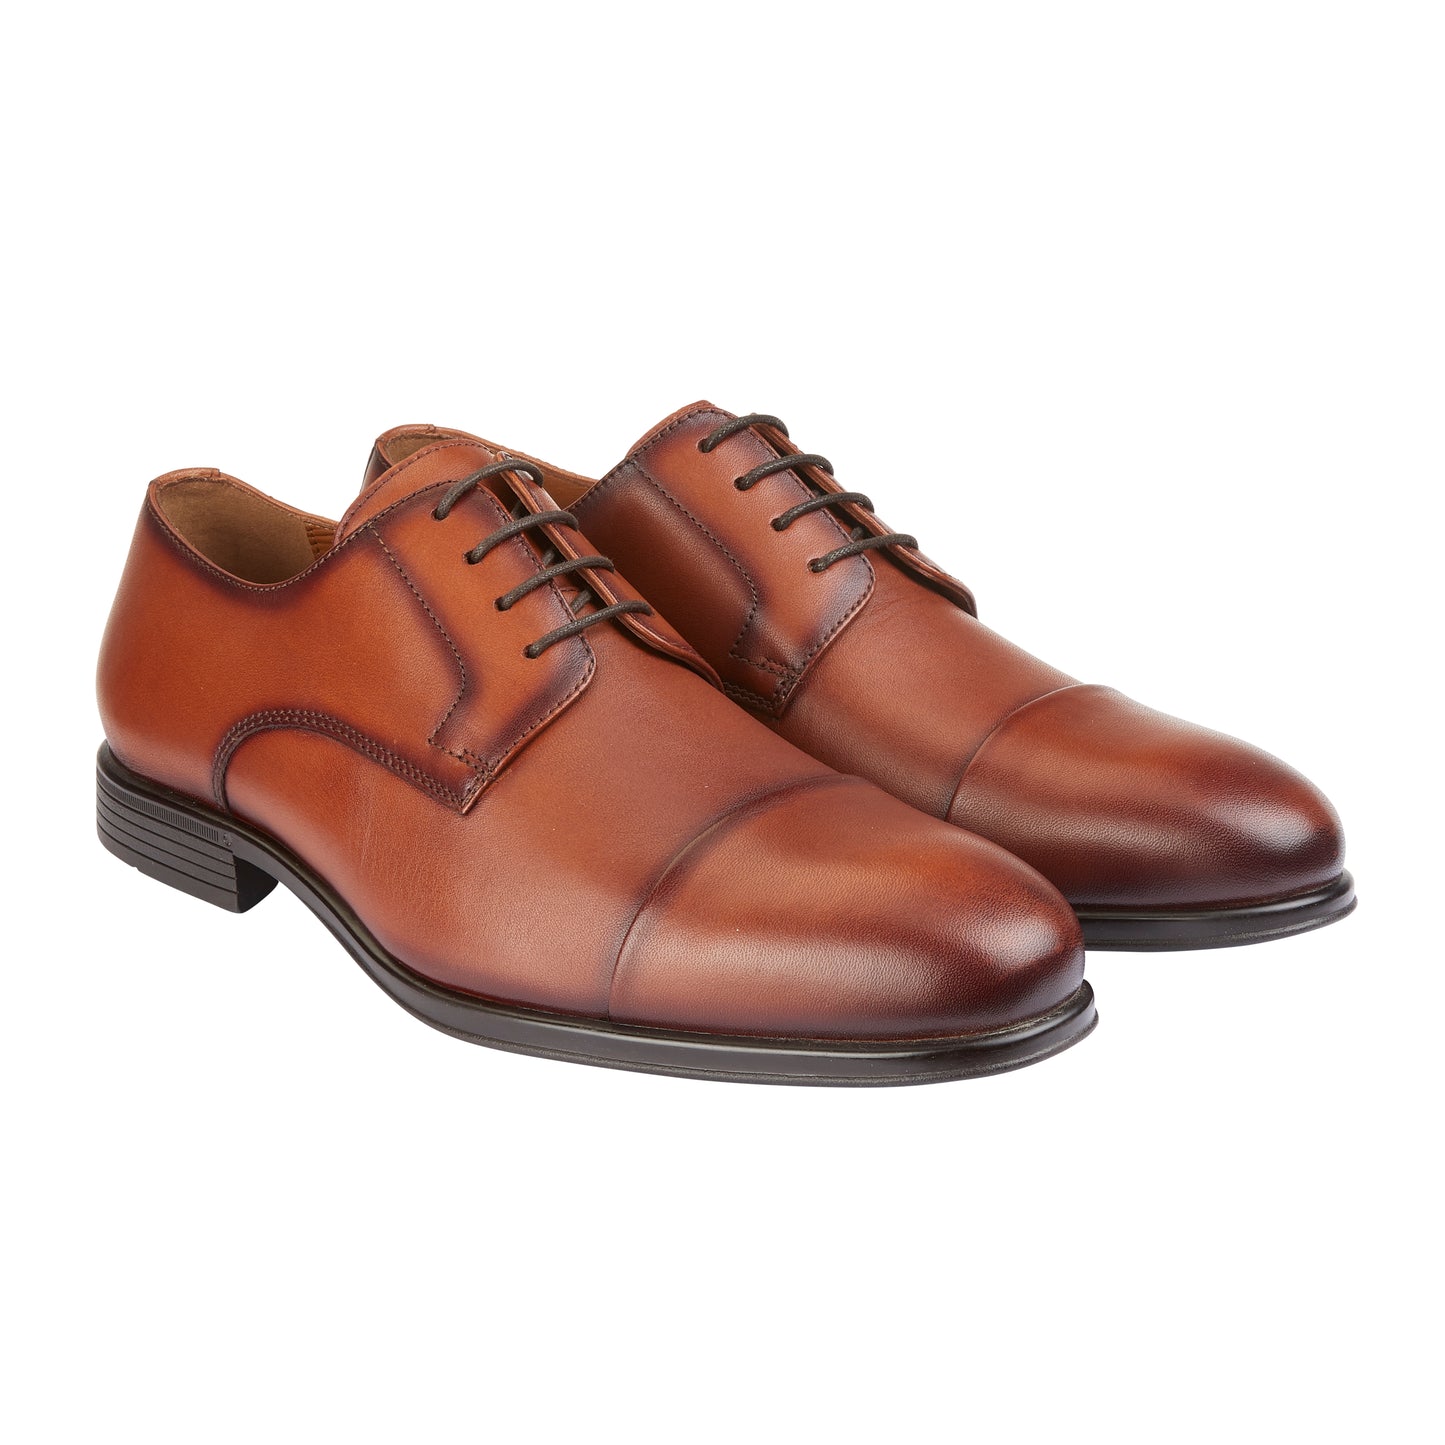 Harry Hern London Bishopsgate Cognac Formal Shoes